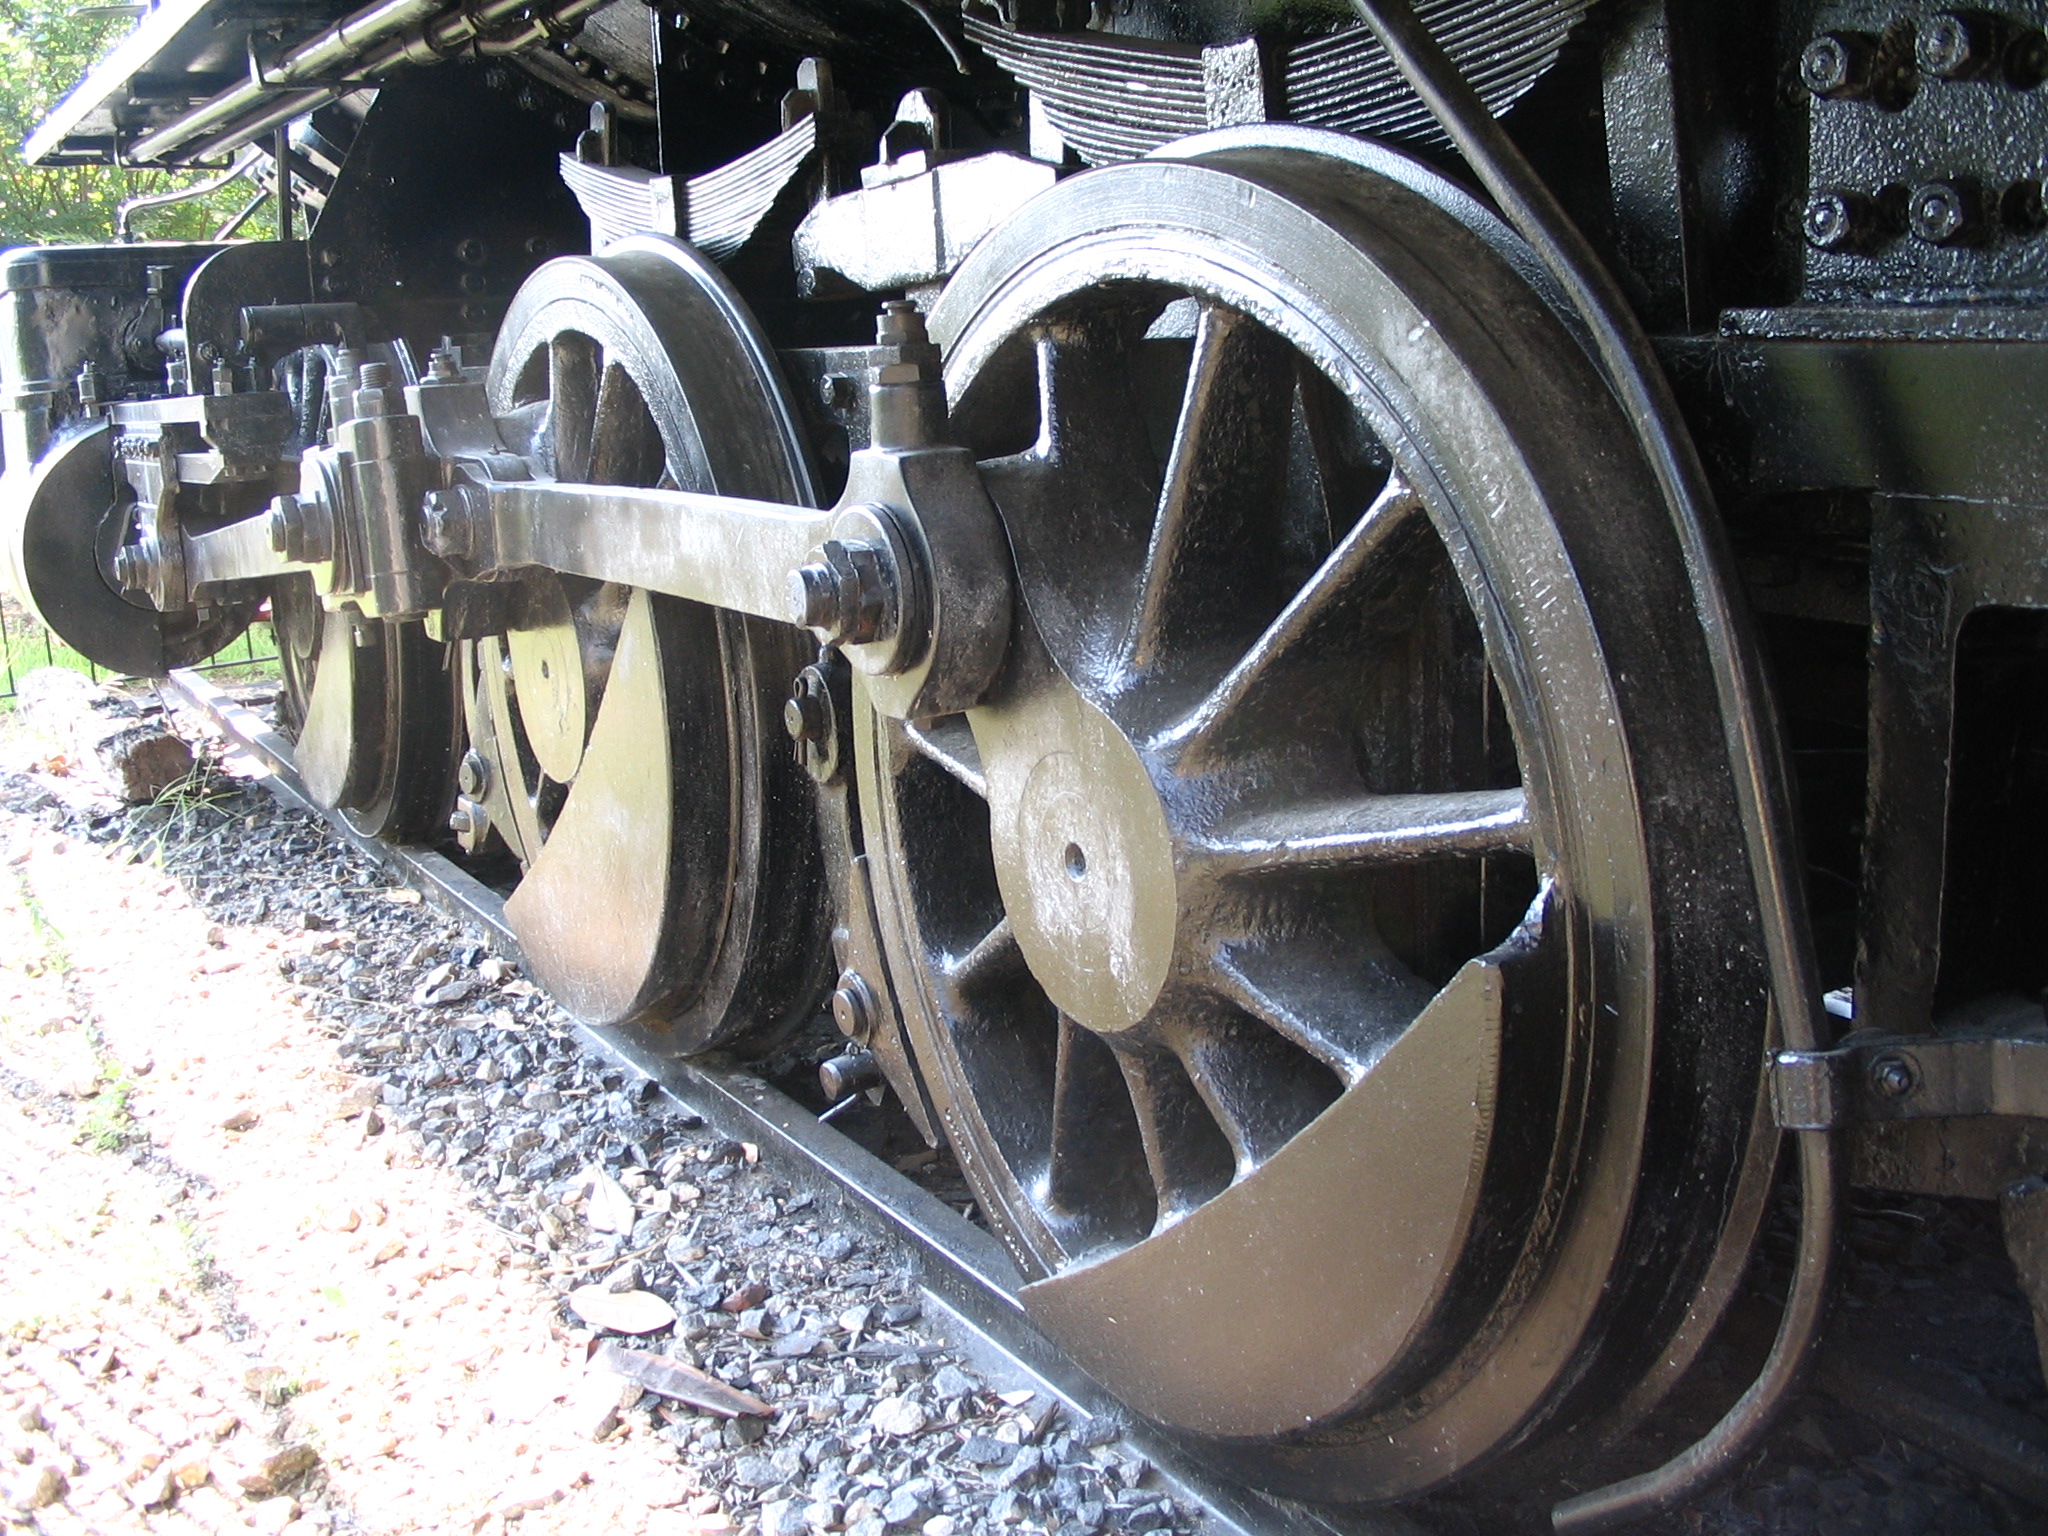 Train Wheels: What Keeps This Bar Horizontal? | Yahoo Answers